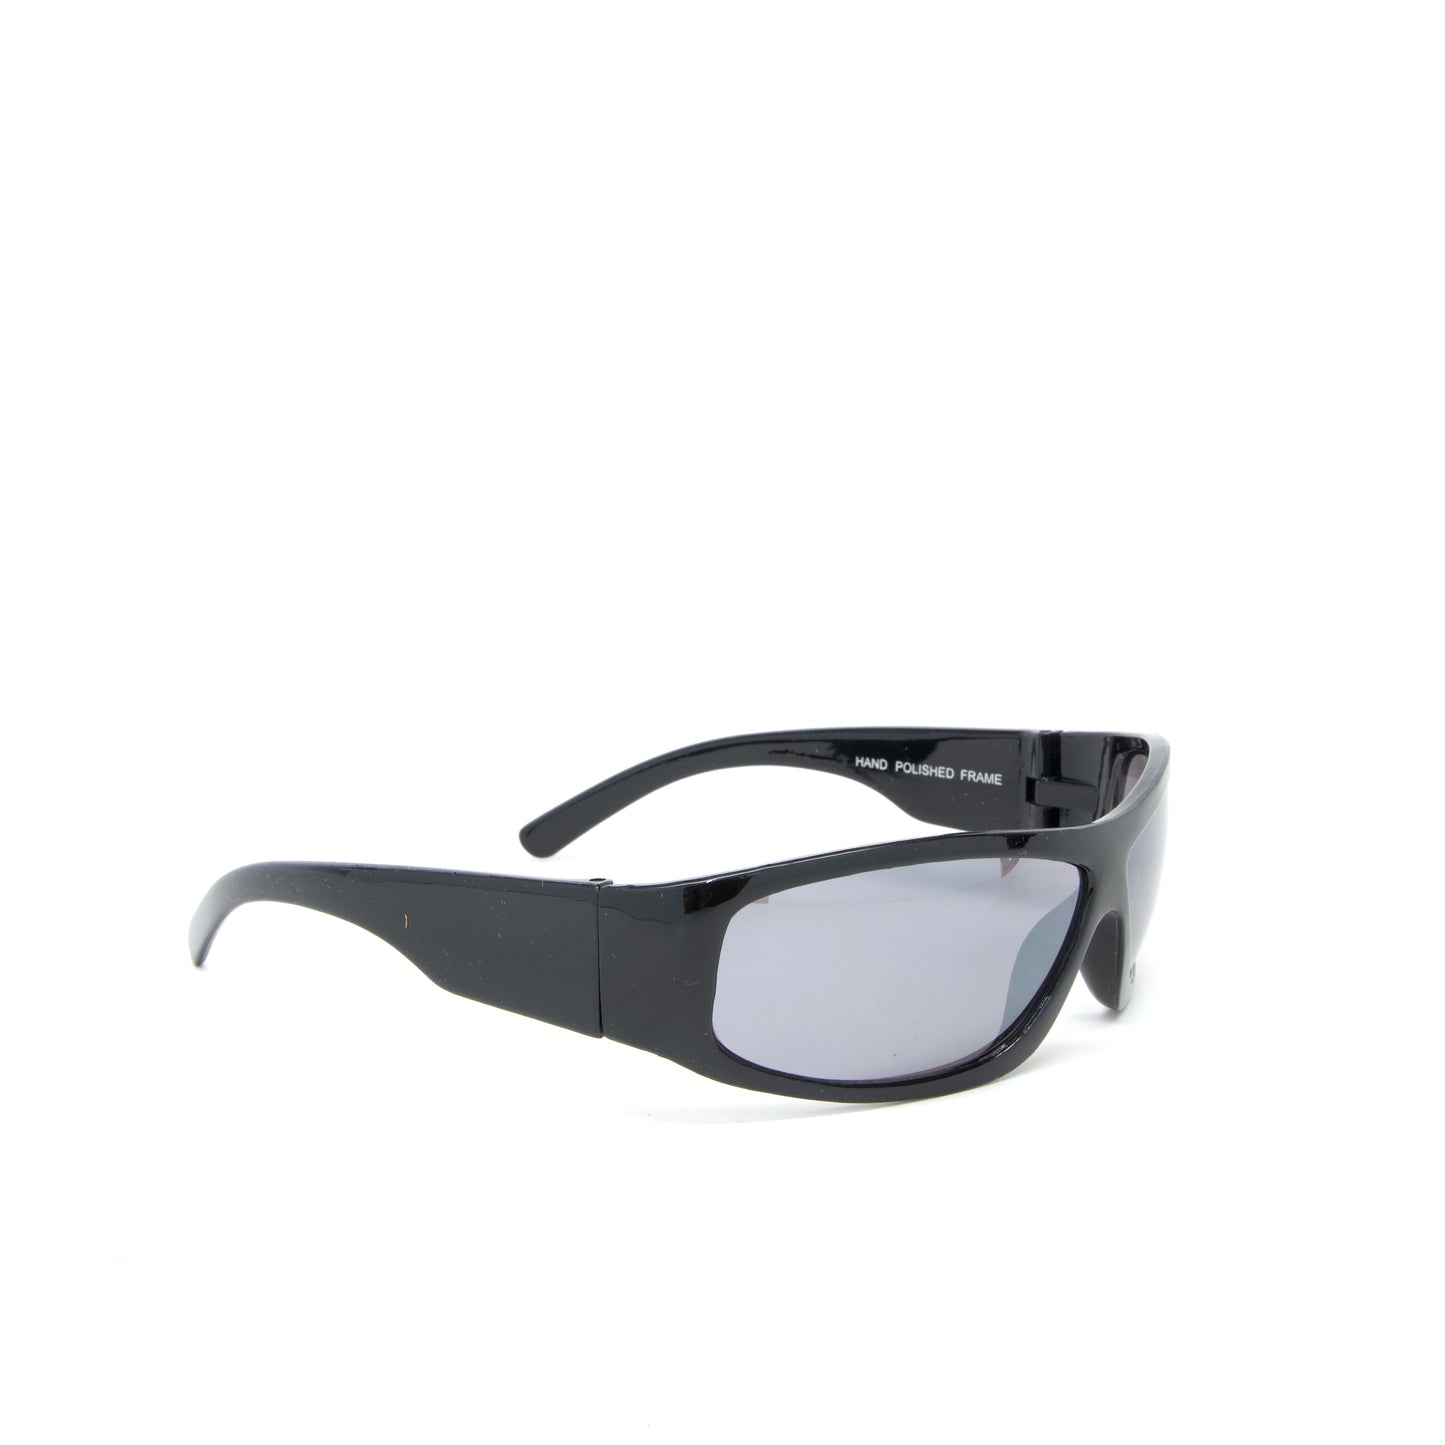 Concept 4 Oversized Lens 2000s Wraparound Visor Sunglasses - Black